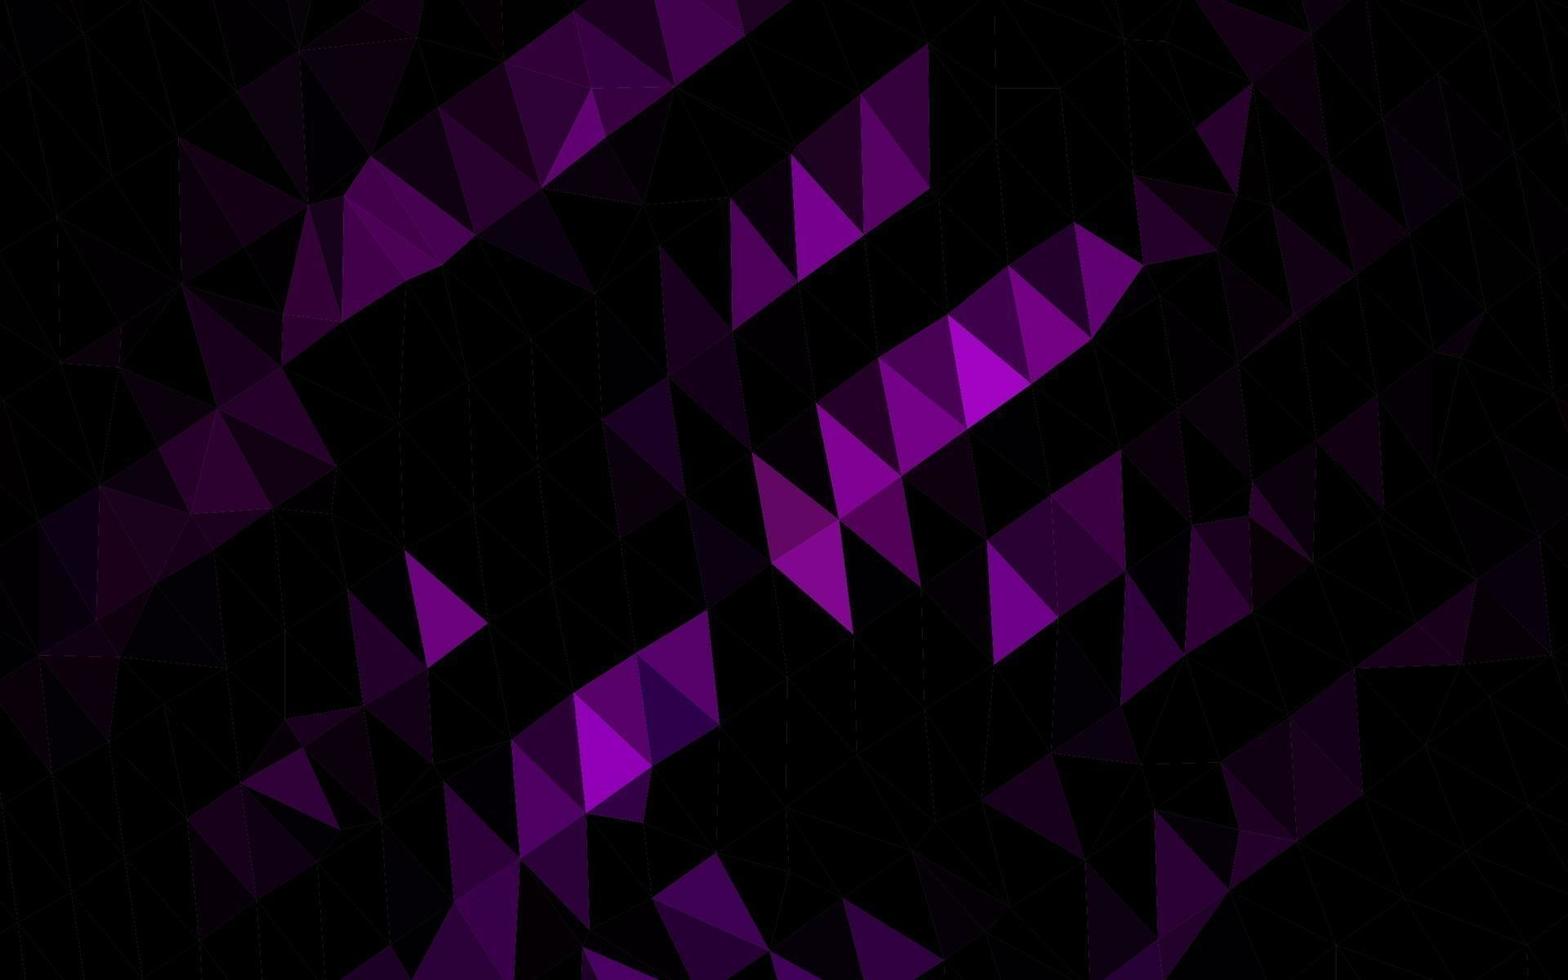 Dark Purple vector triangle mosaic cover.